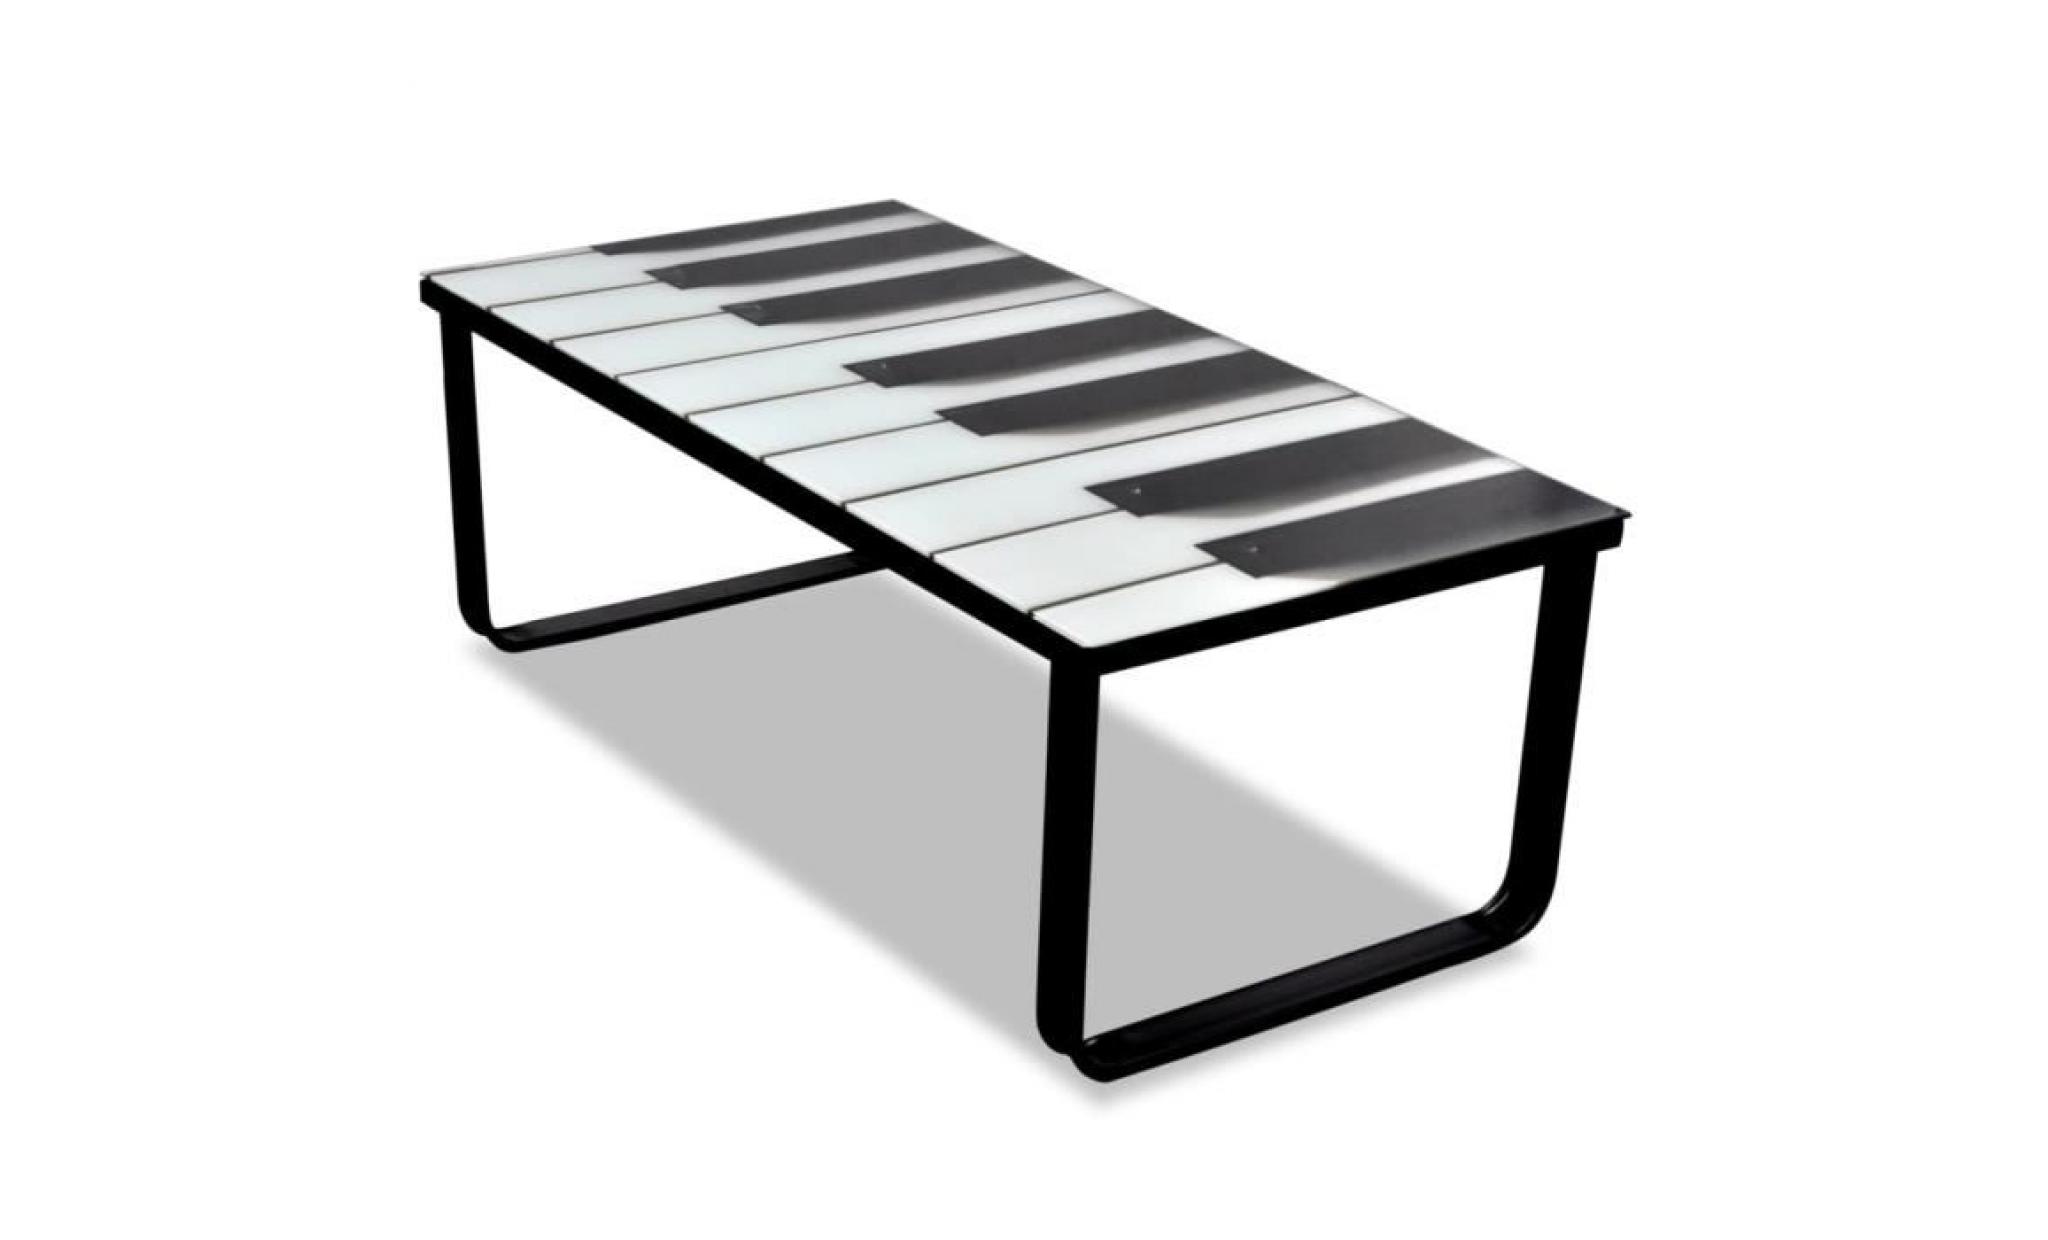 table basse avec impression de piano dessus de table en verre table basse scandinave table bass style contemporain